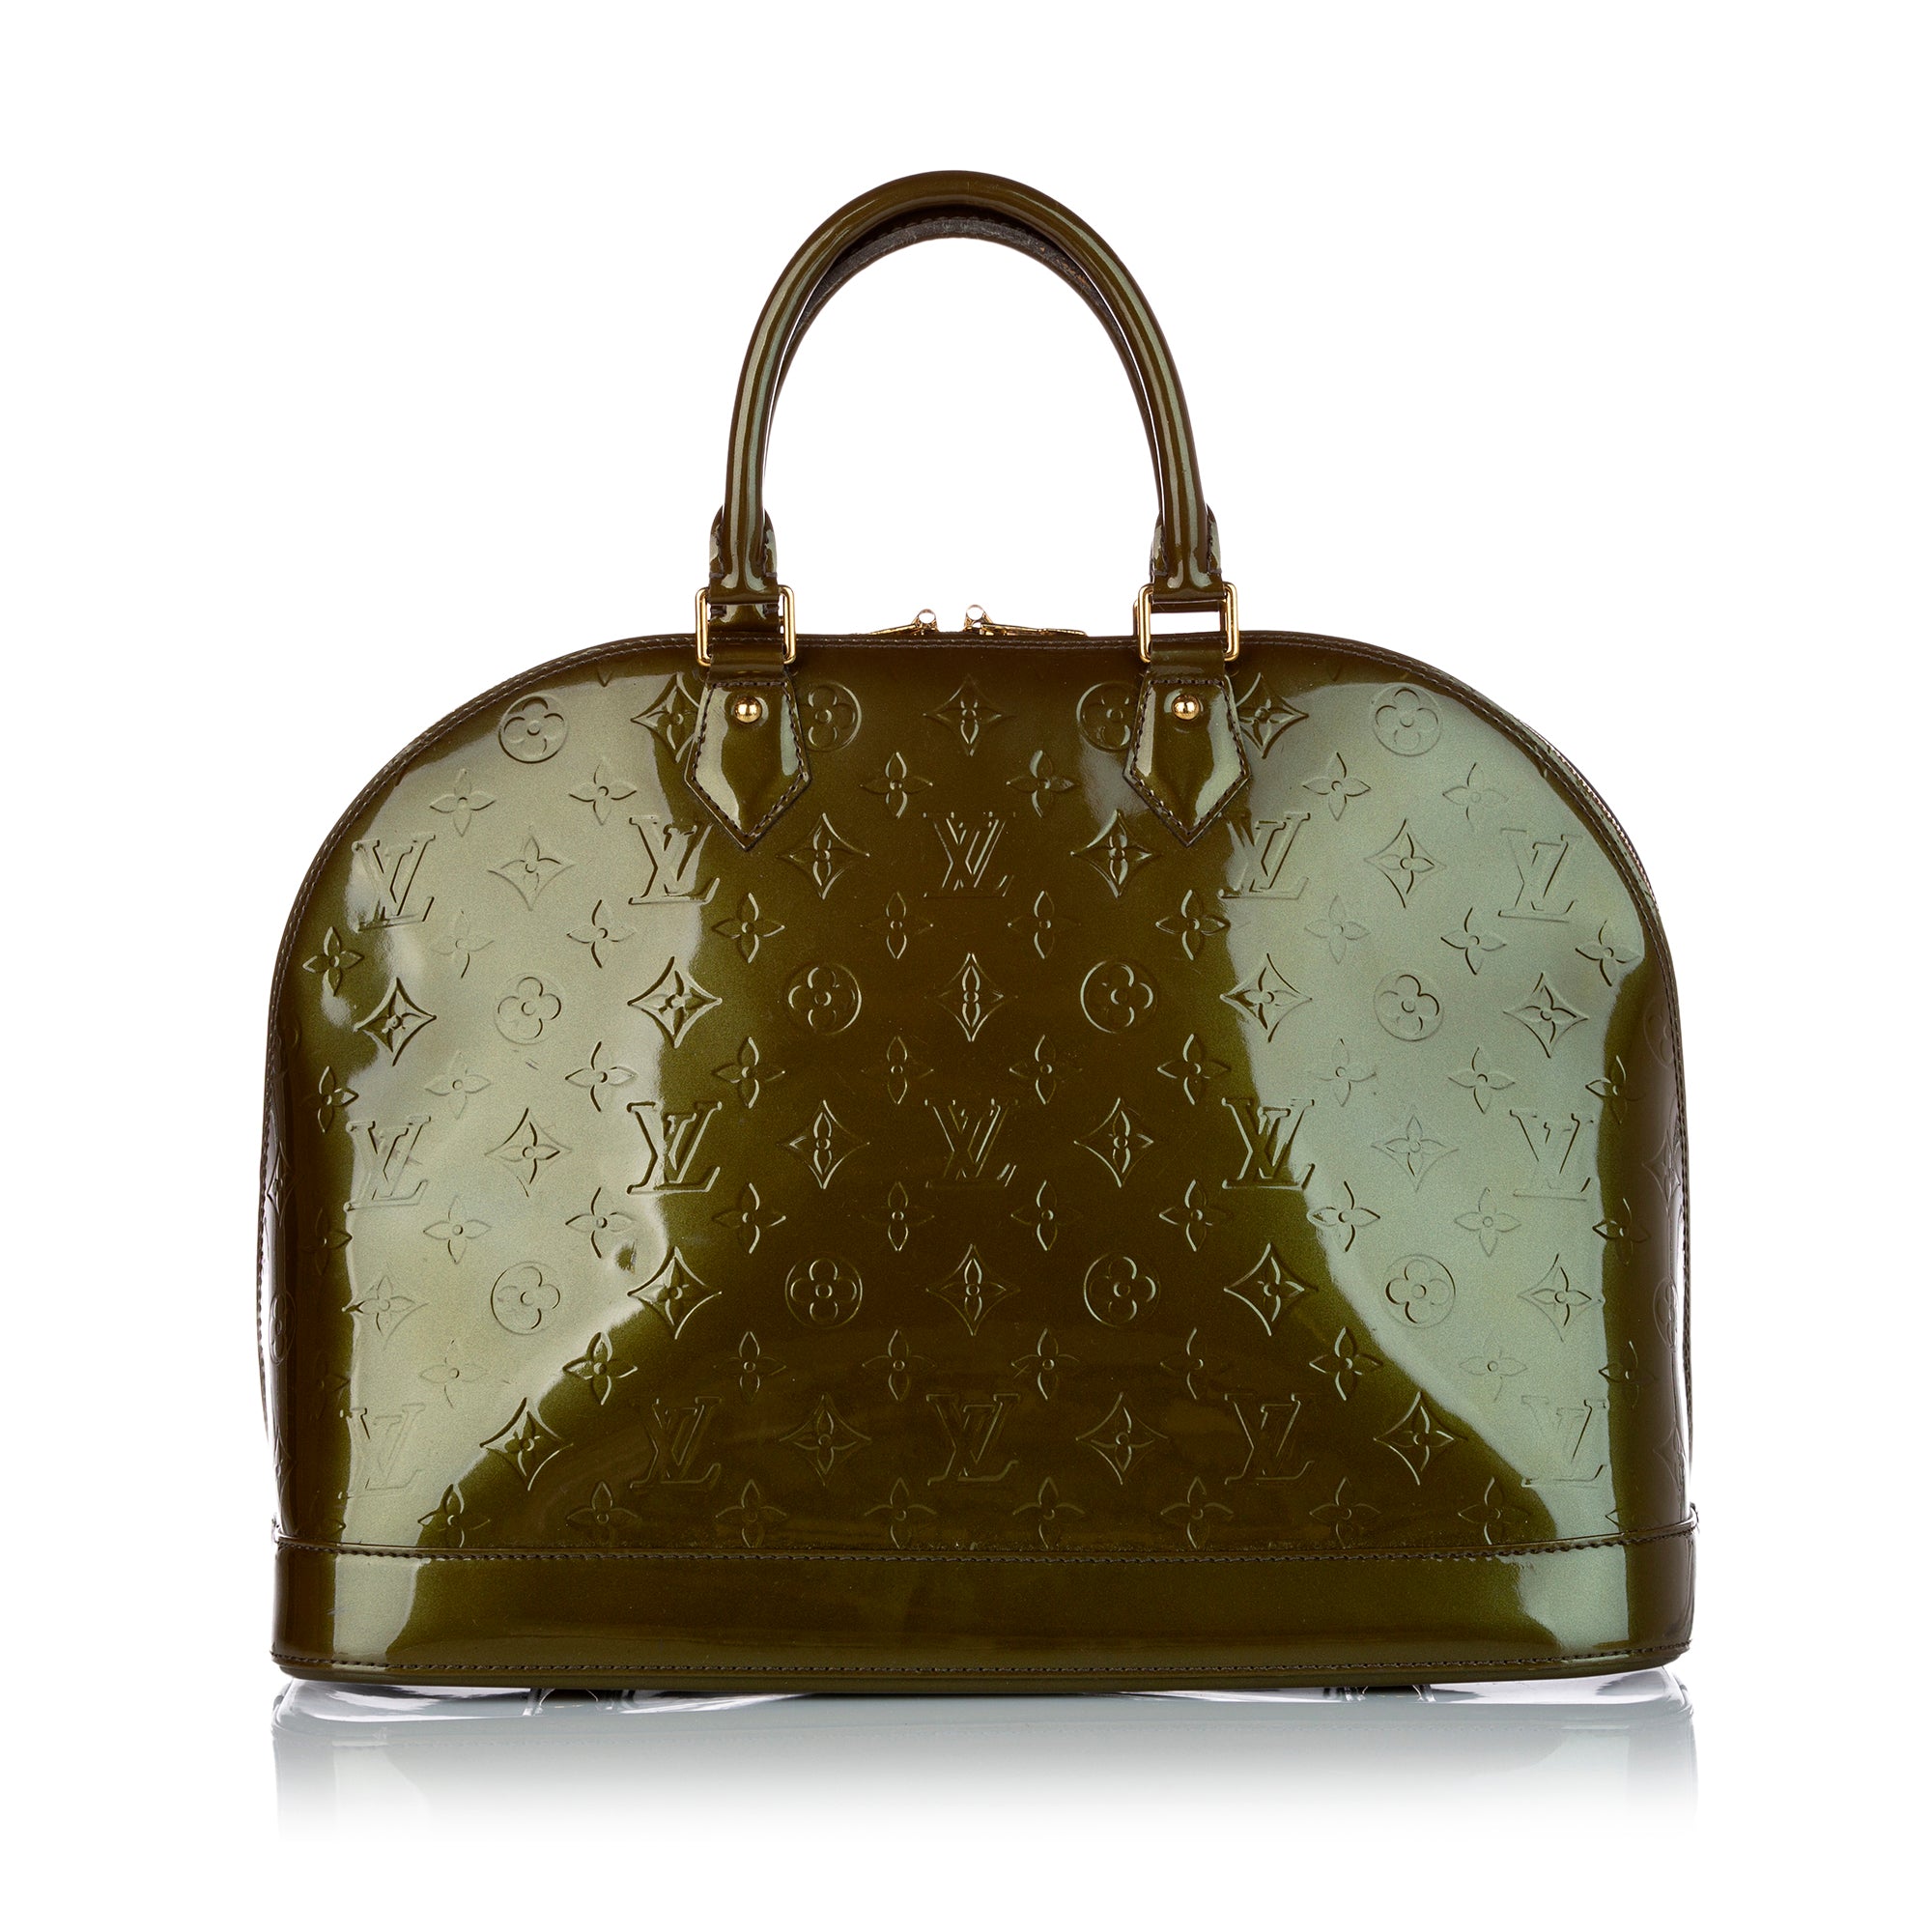 Authentic Louis Vuitton Vintage LV Monogram Alma MM Bag Very Good Condition